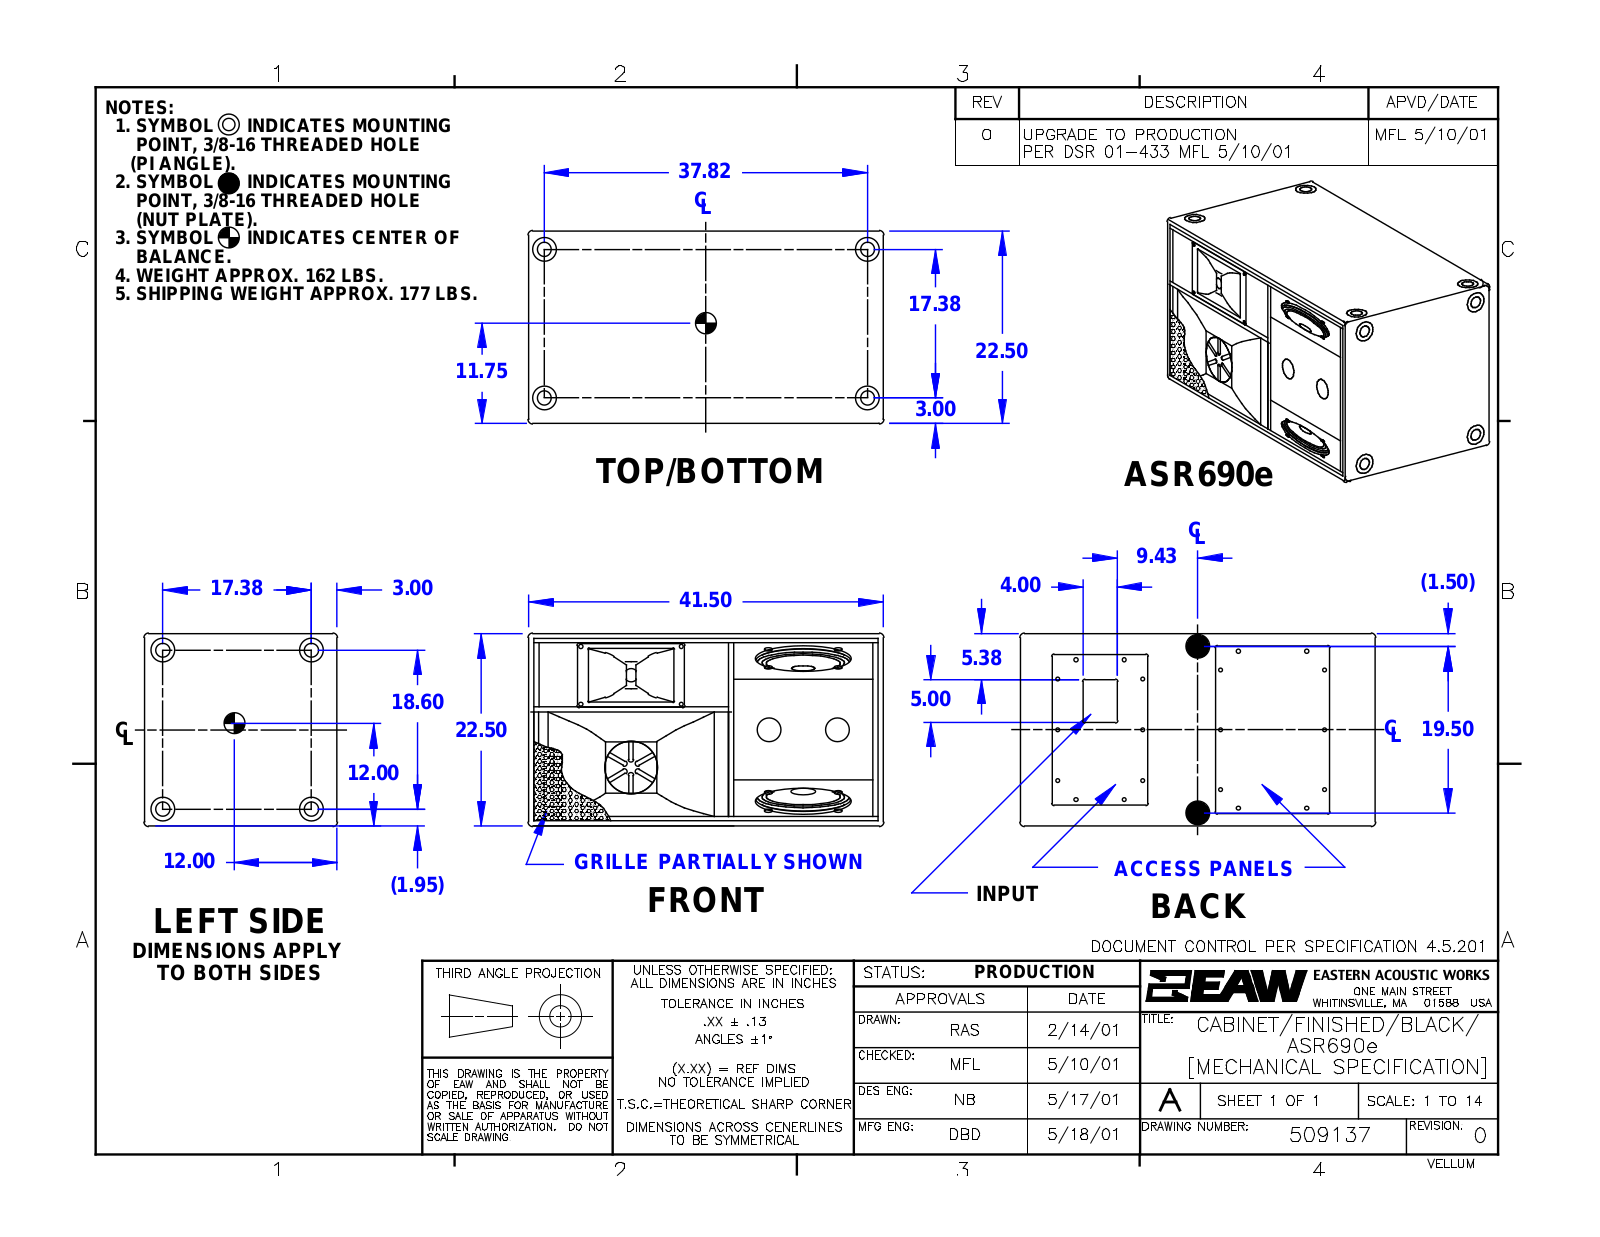 Panasonic ASR690e Service Manual